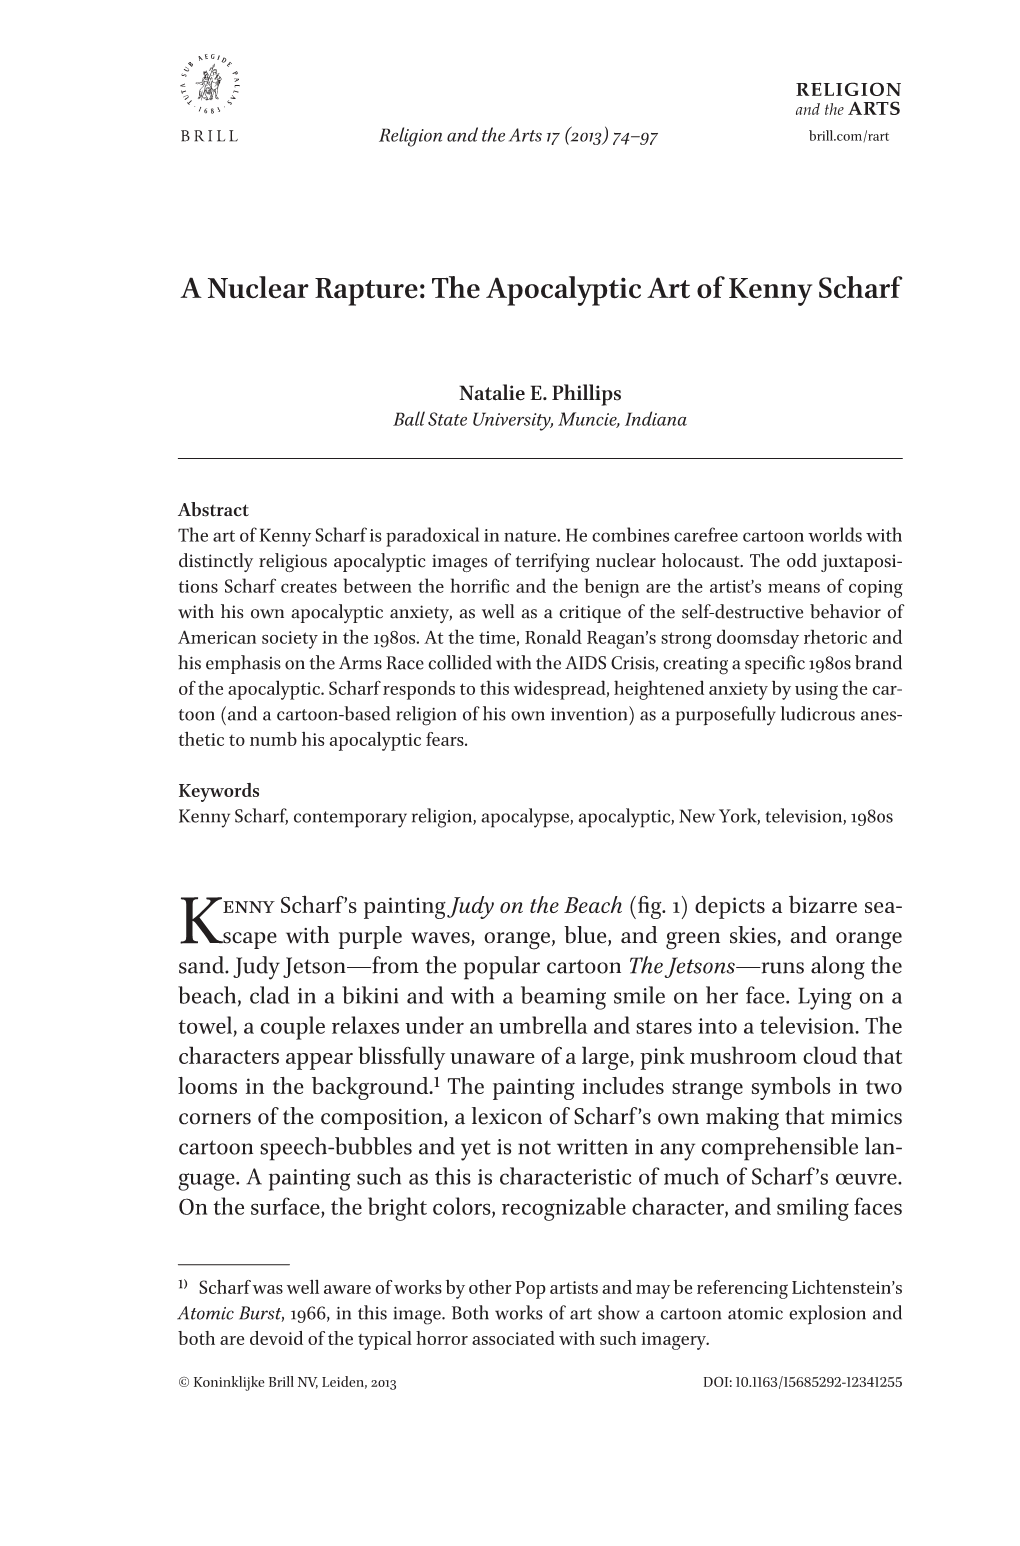 The Apocalyptic Art of Kenny Scharf